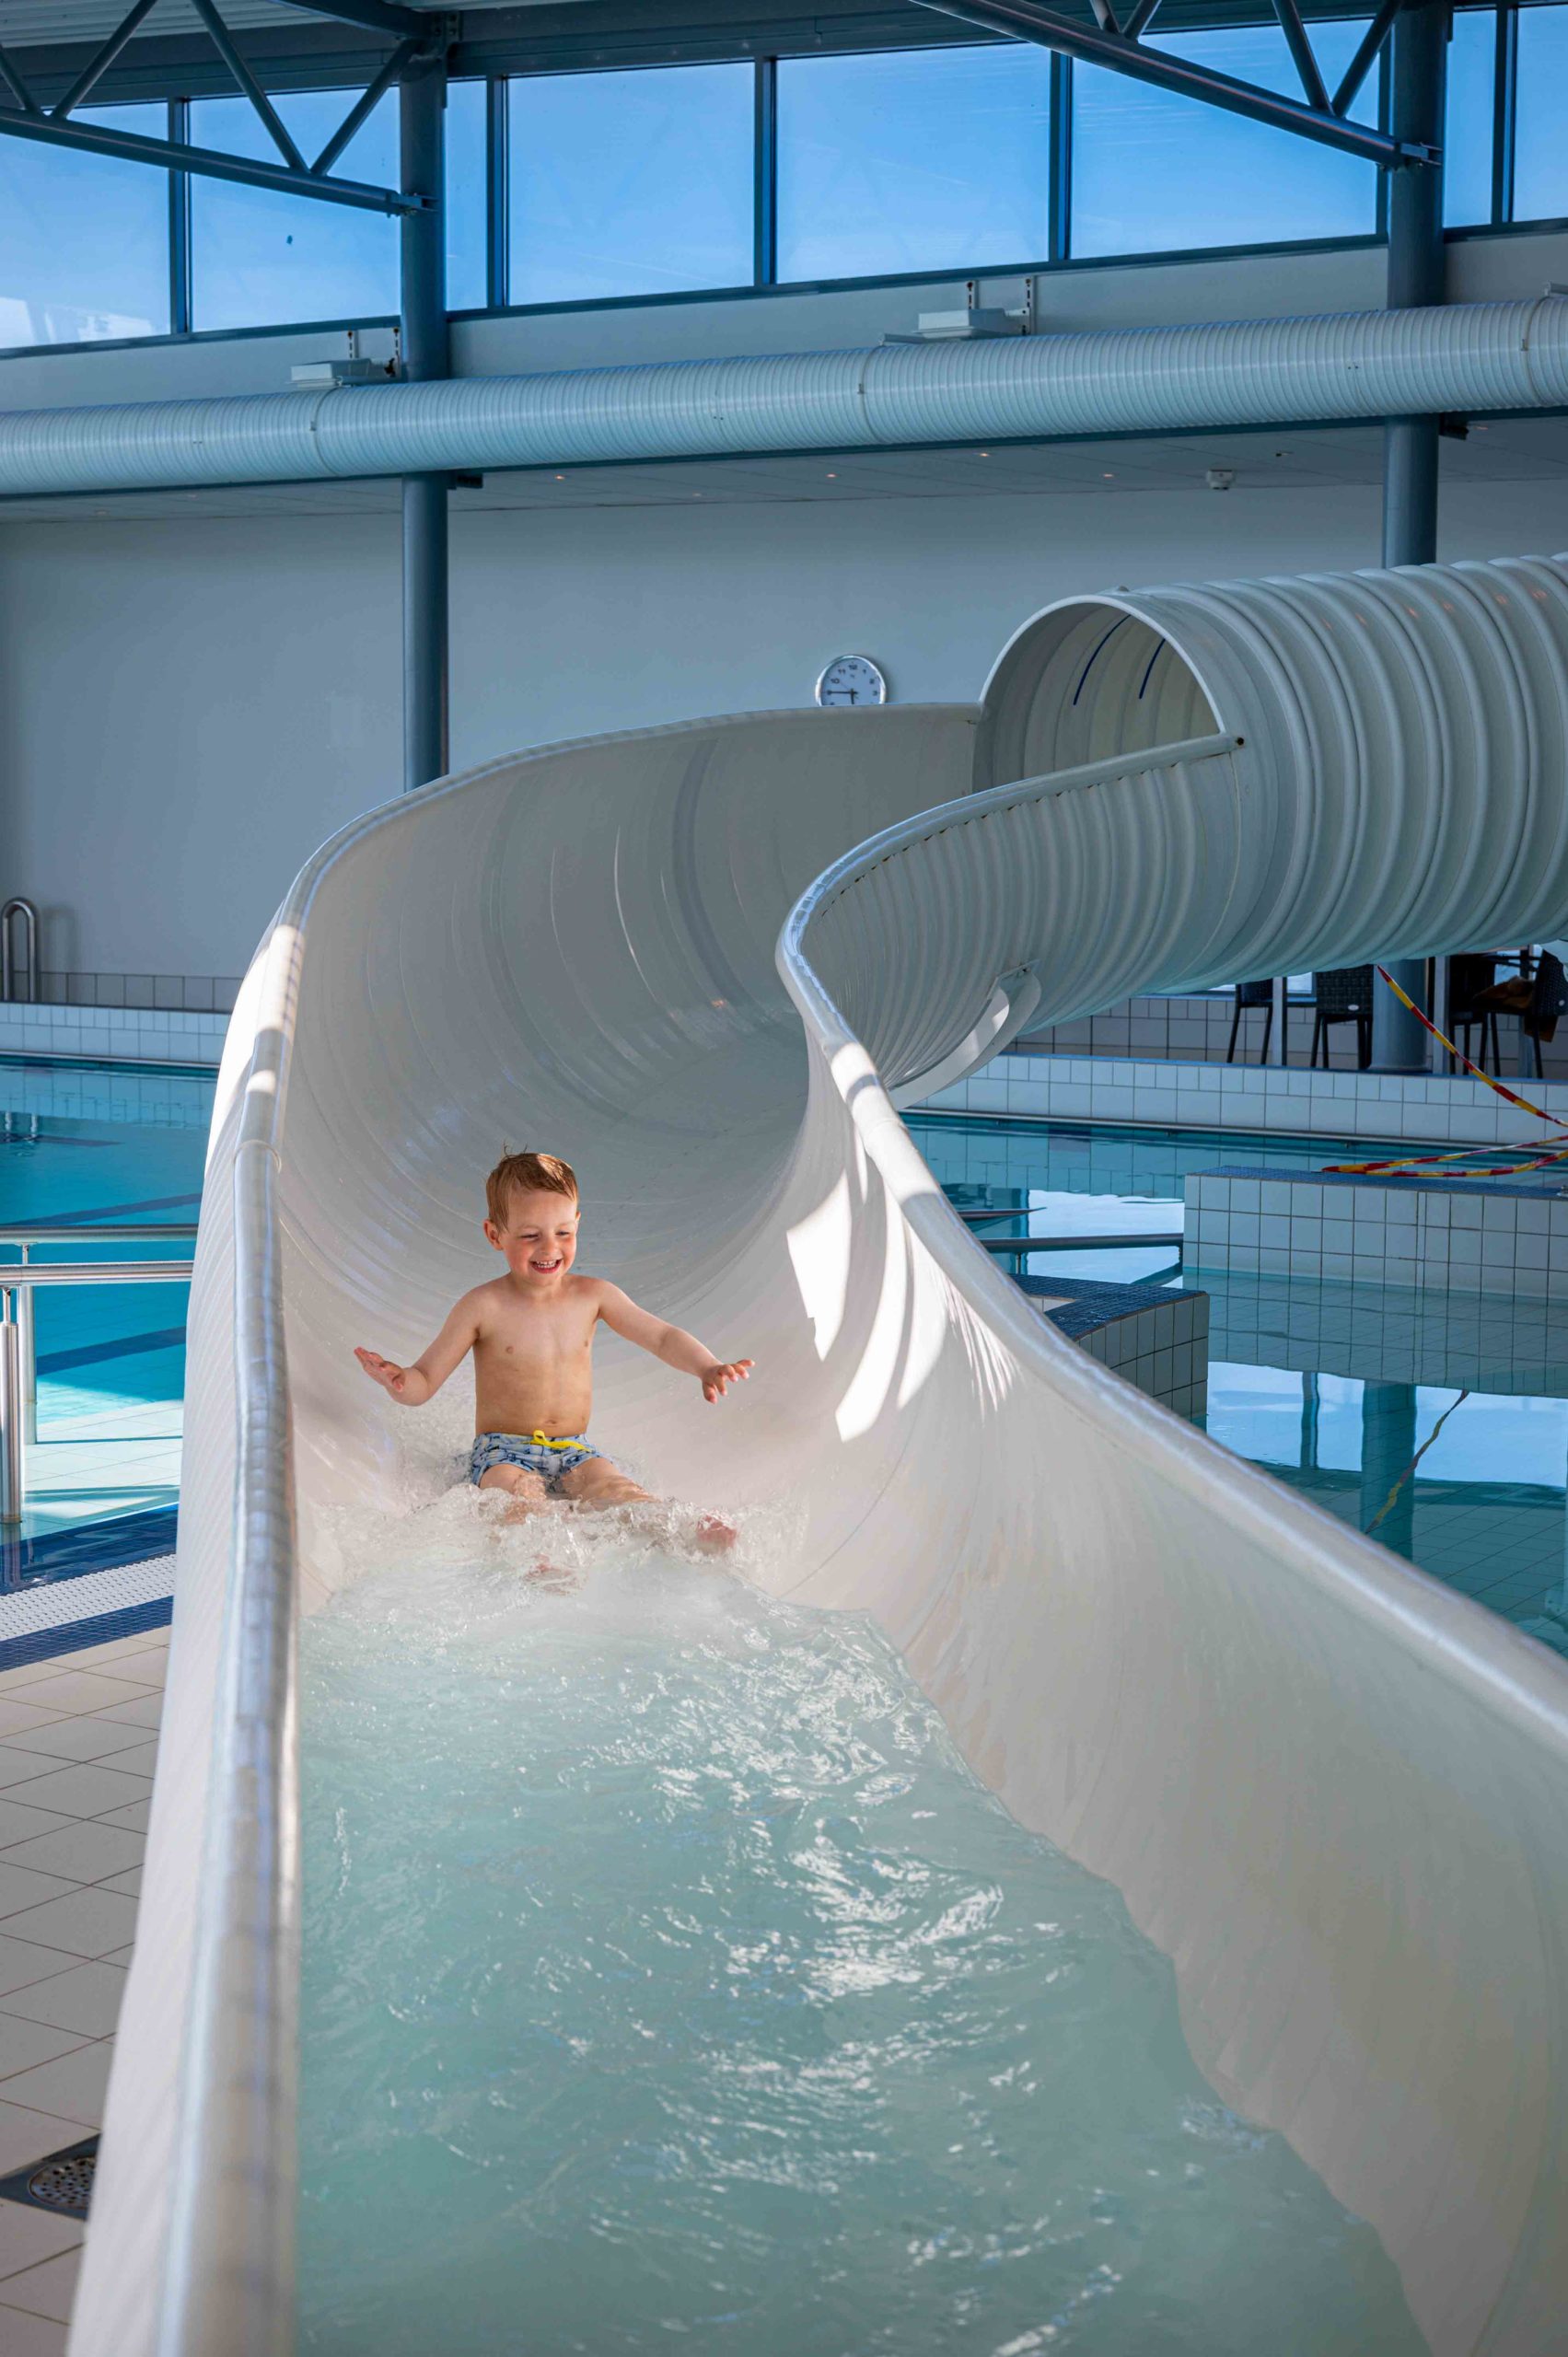 A little boy tries the slide in Håp i Havet